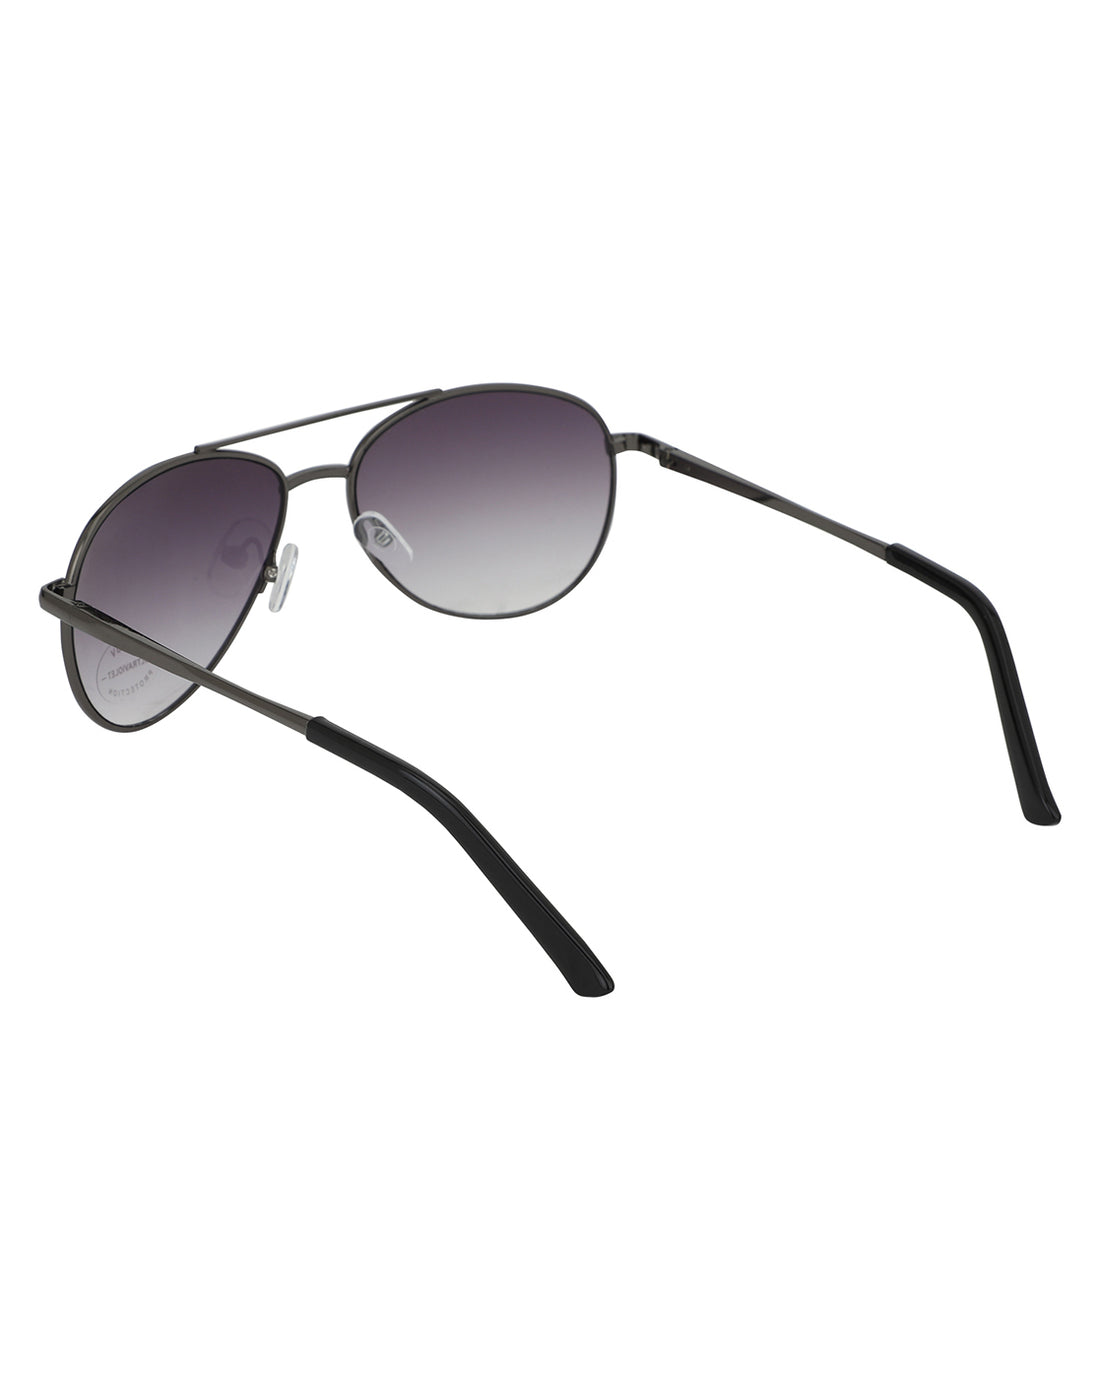 Carlton London Grey Aviator Sunglasses with UV Protected Lens For Men